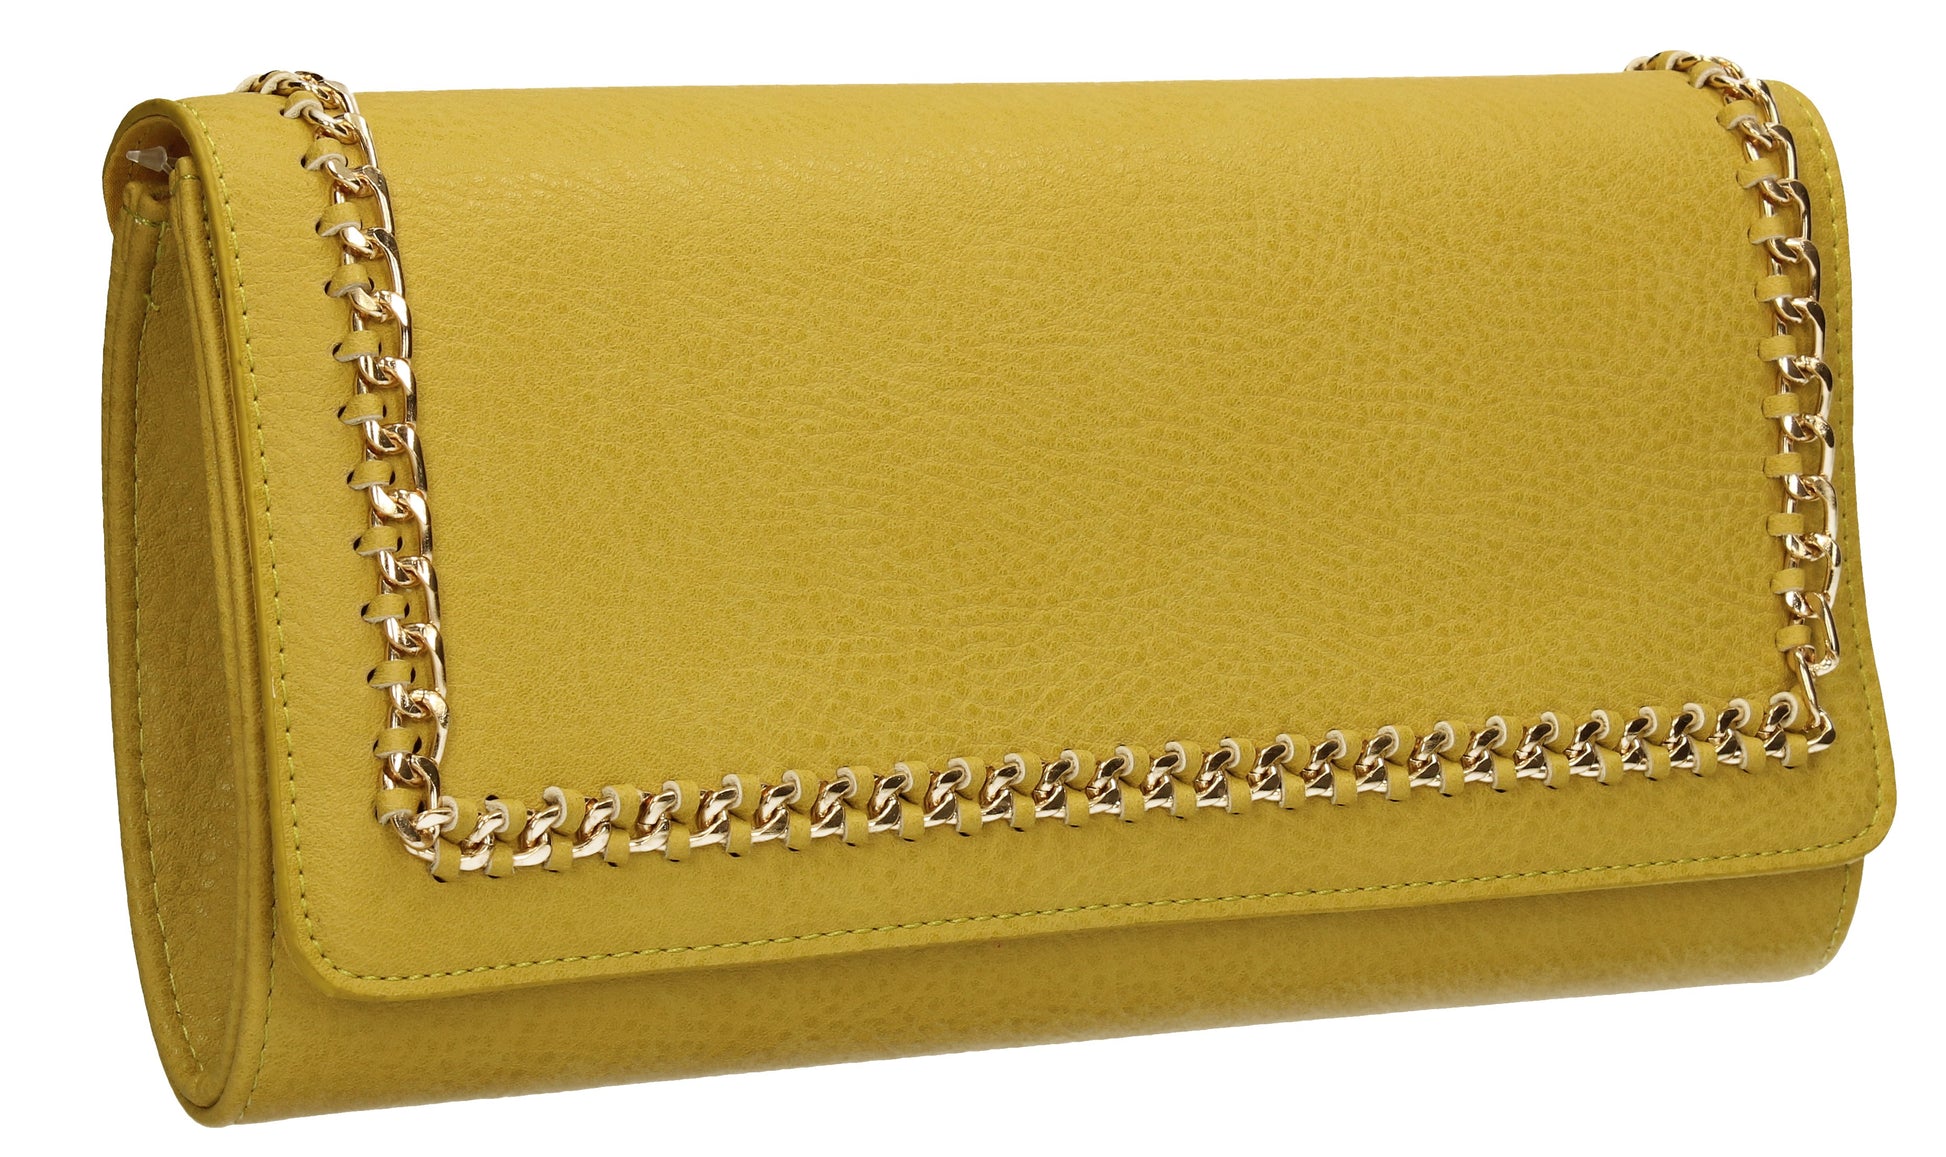 SWANKYSWANS Ella Chain Flapover Clutch Bag Yellow Cute Cheap Clutch Bag For Weddings School and Work